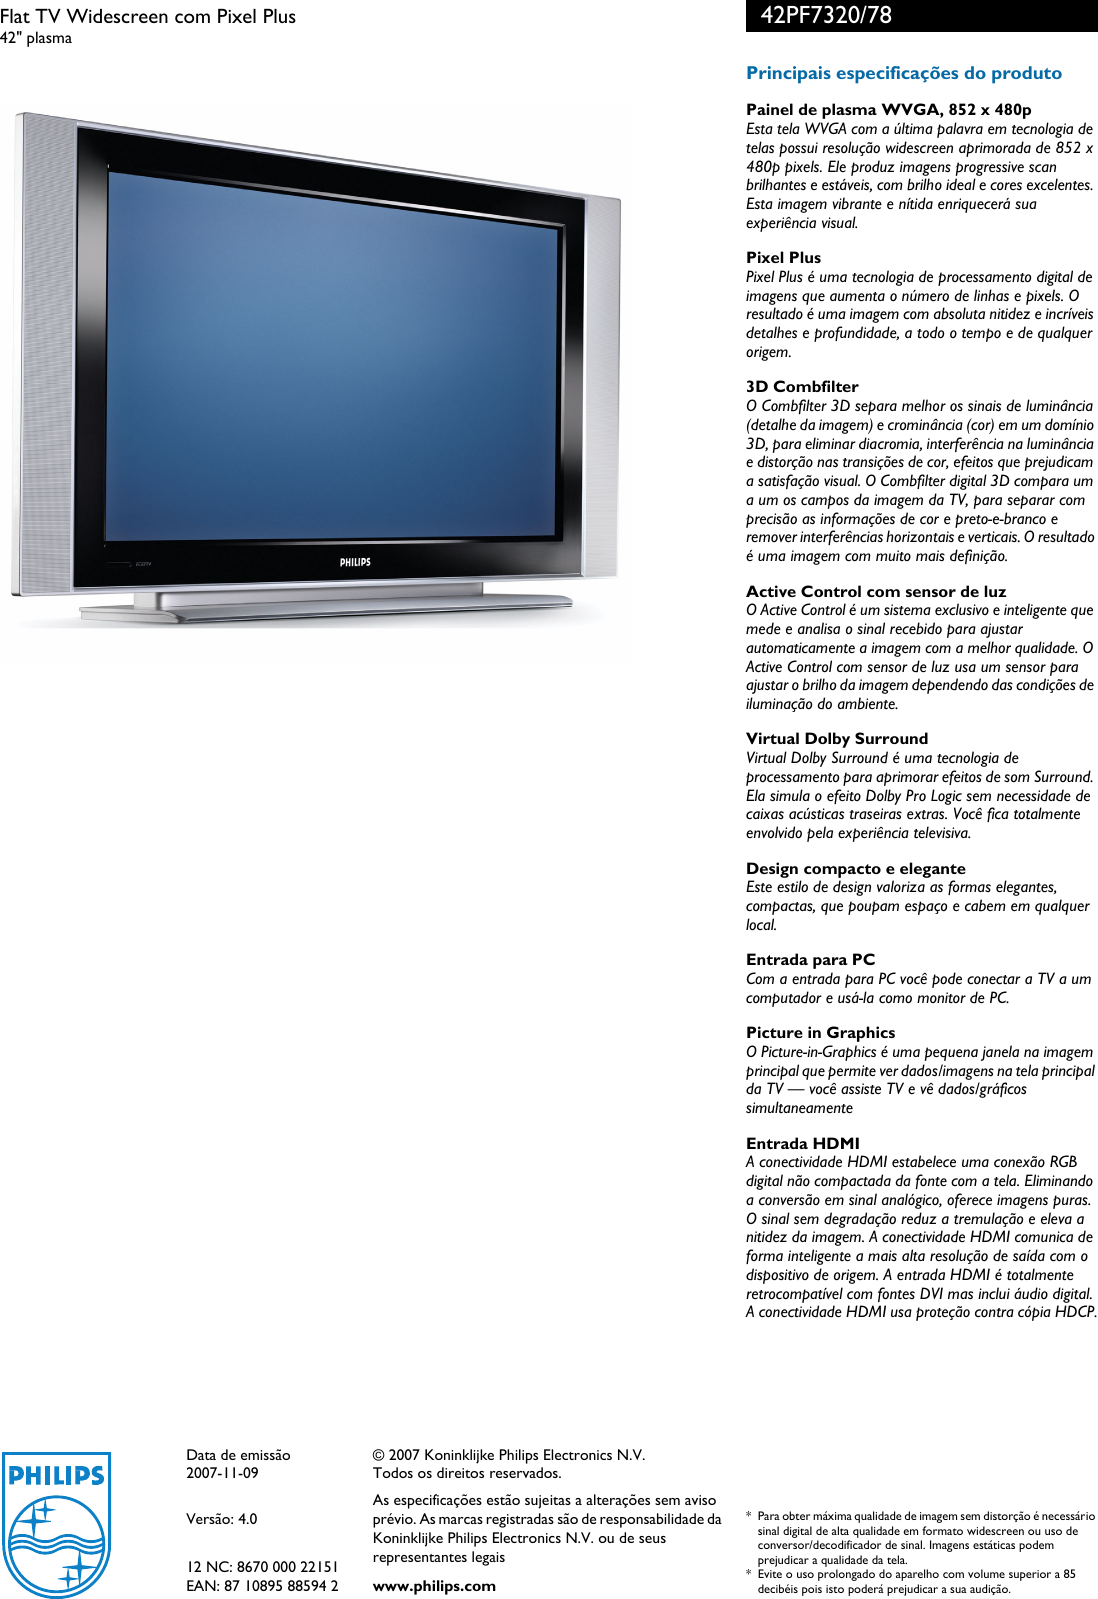 Page 3 of 3 - Philips 42PF7320/78 Flat TV Widescreen Com Pixel Plus User Manual Folheto 42pf7320 78 Pss Brpbr